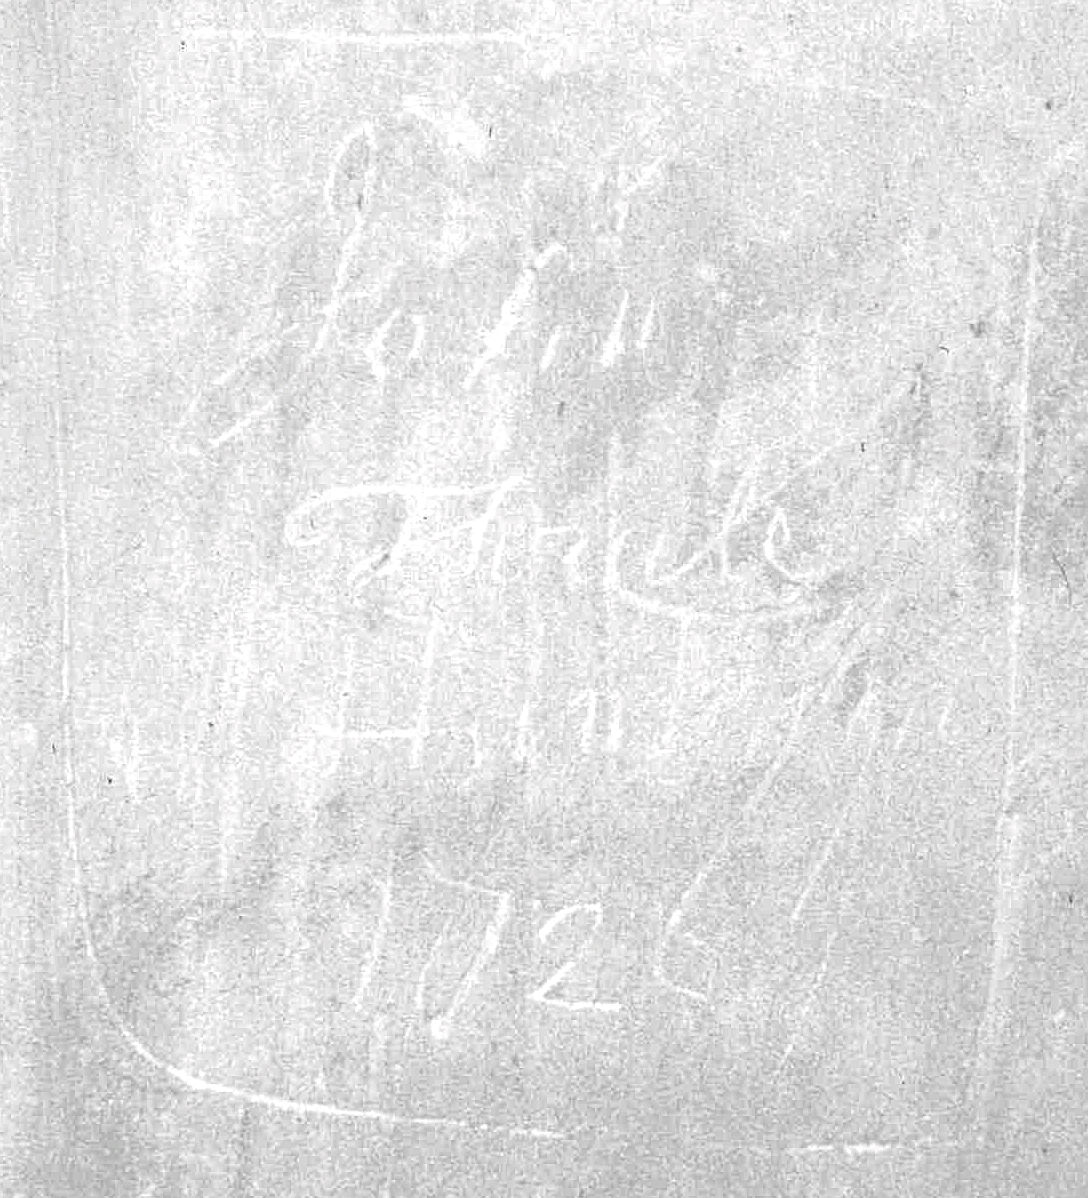 John Thrale 1726 graffiti, St Albans Cathedral